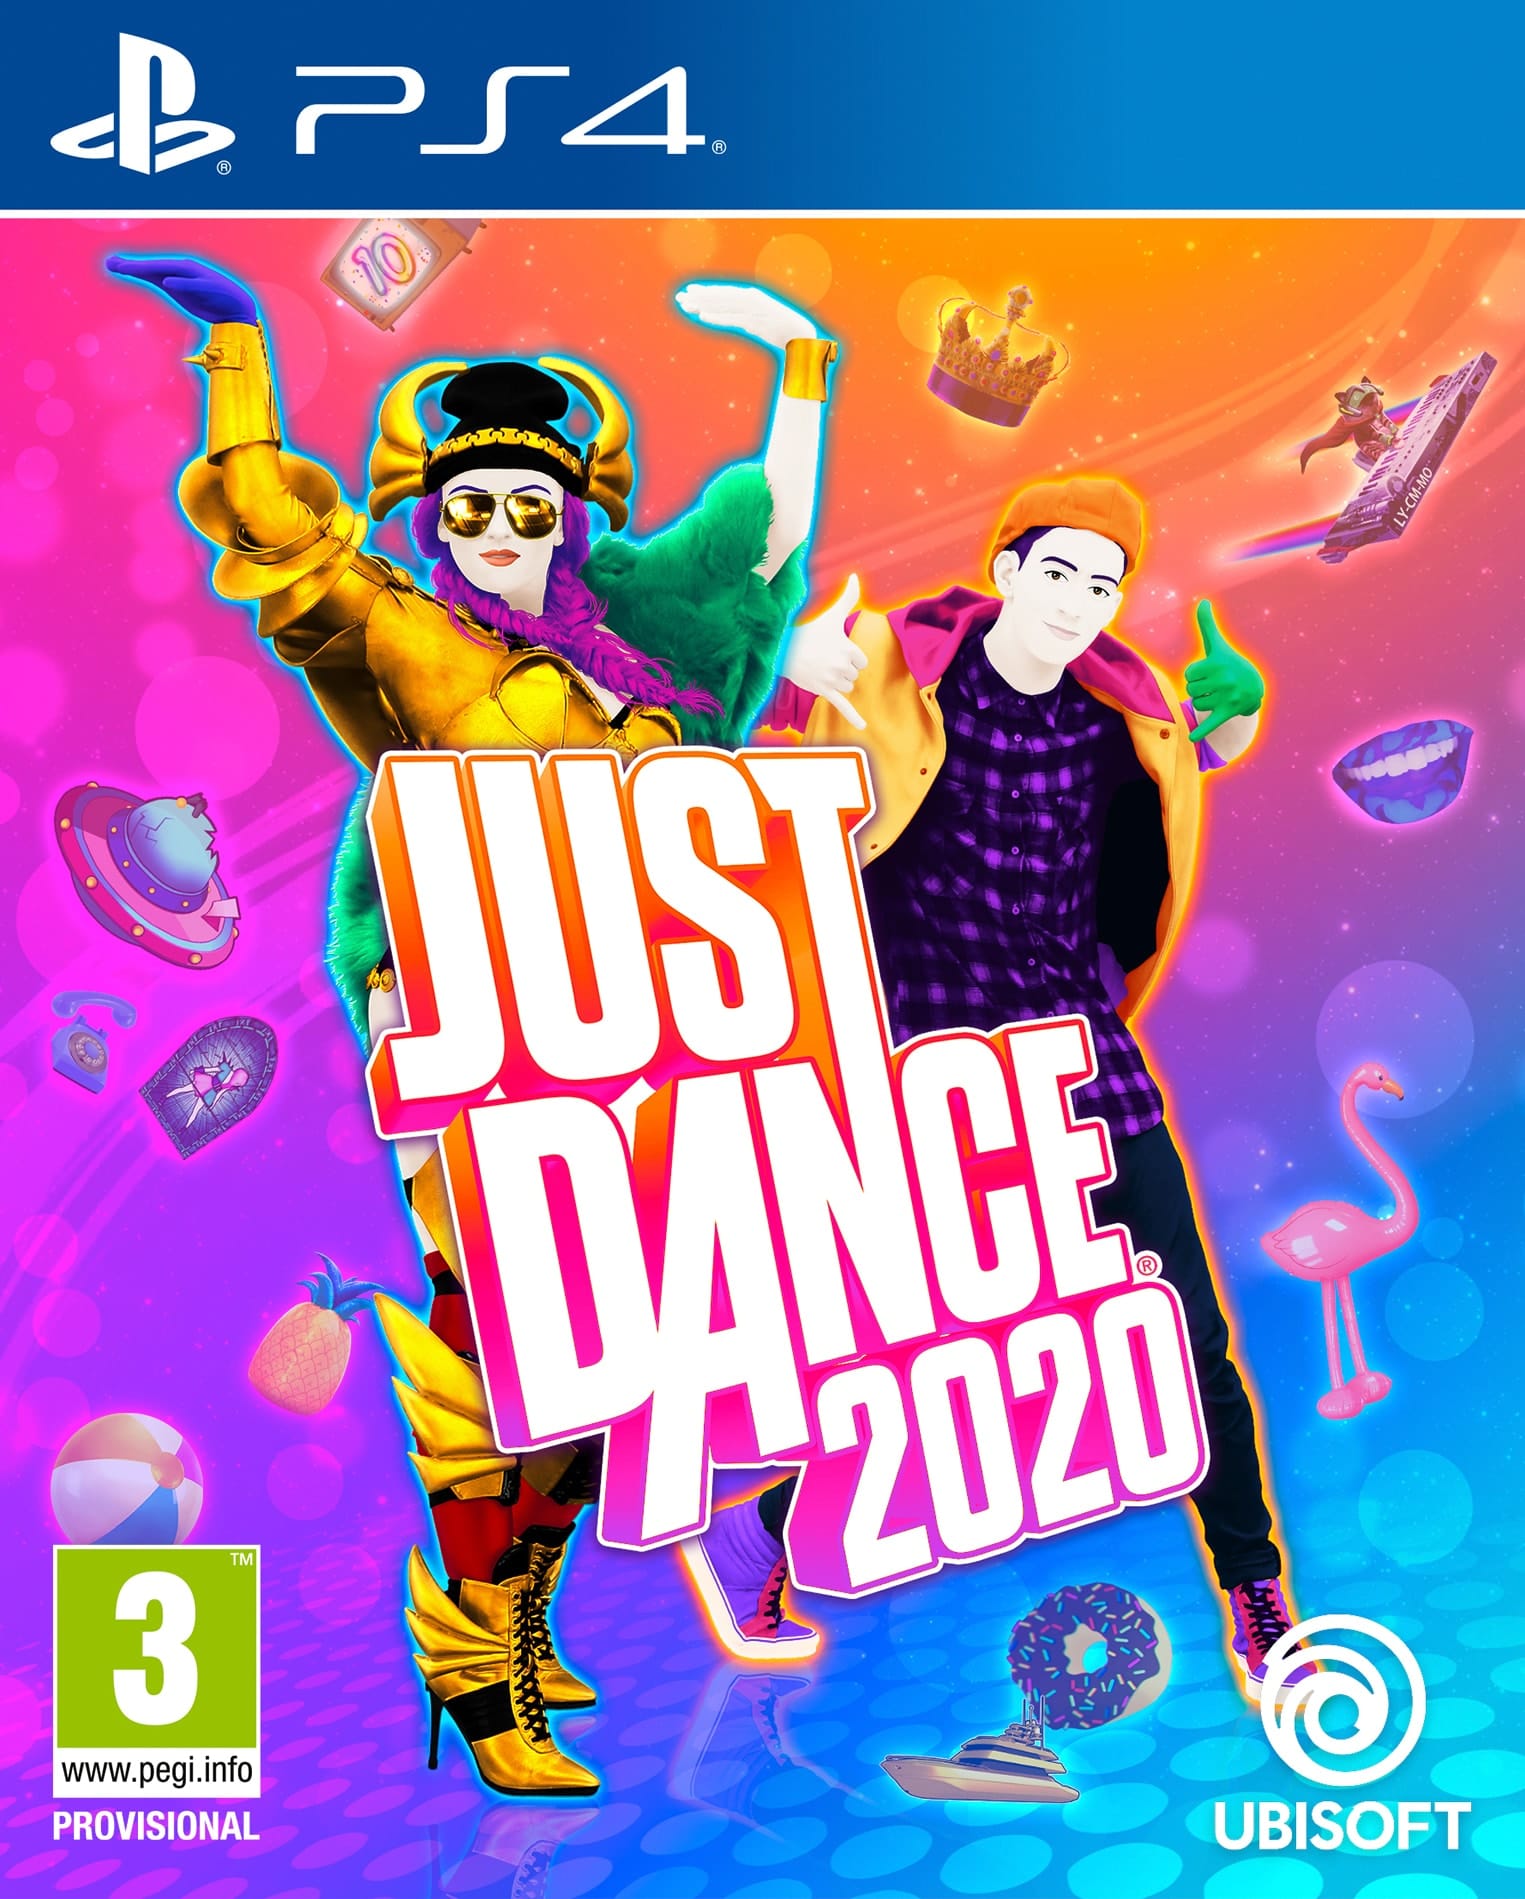 Just dance 2020 jaquette ps4 min 2